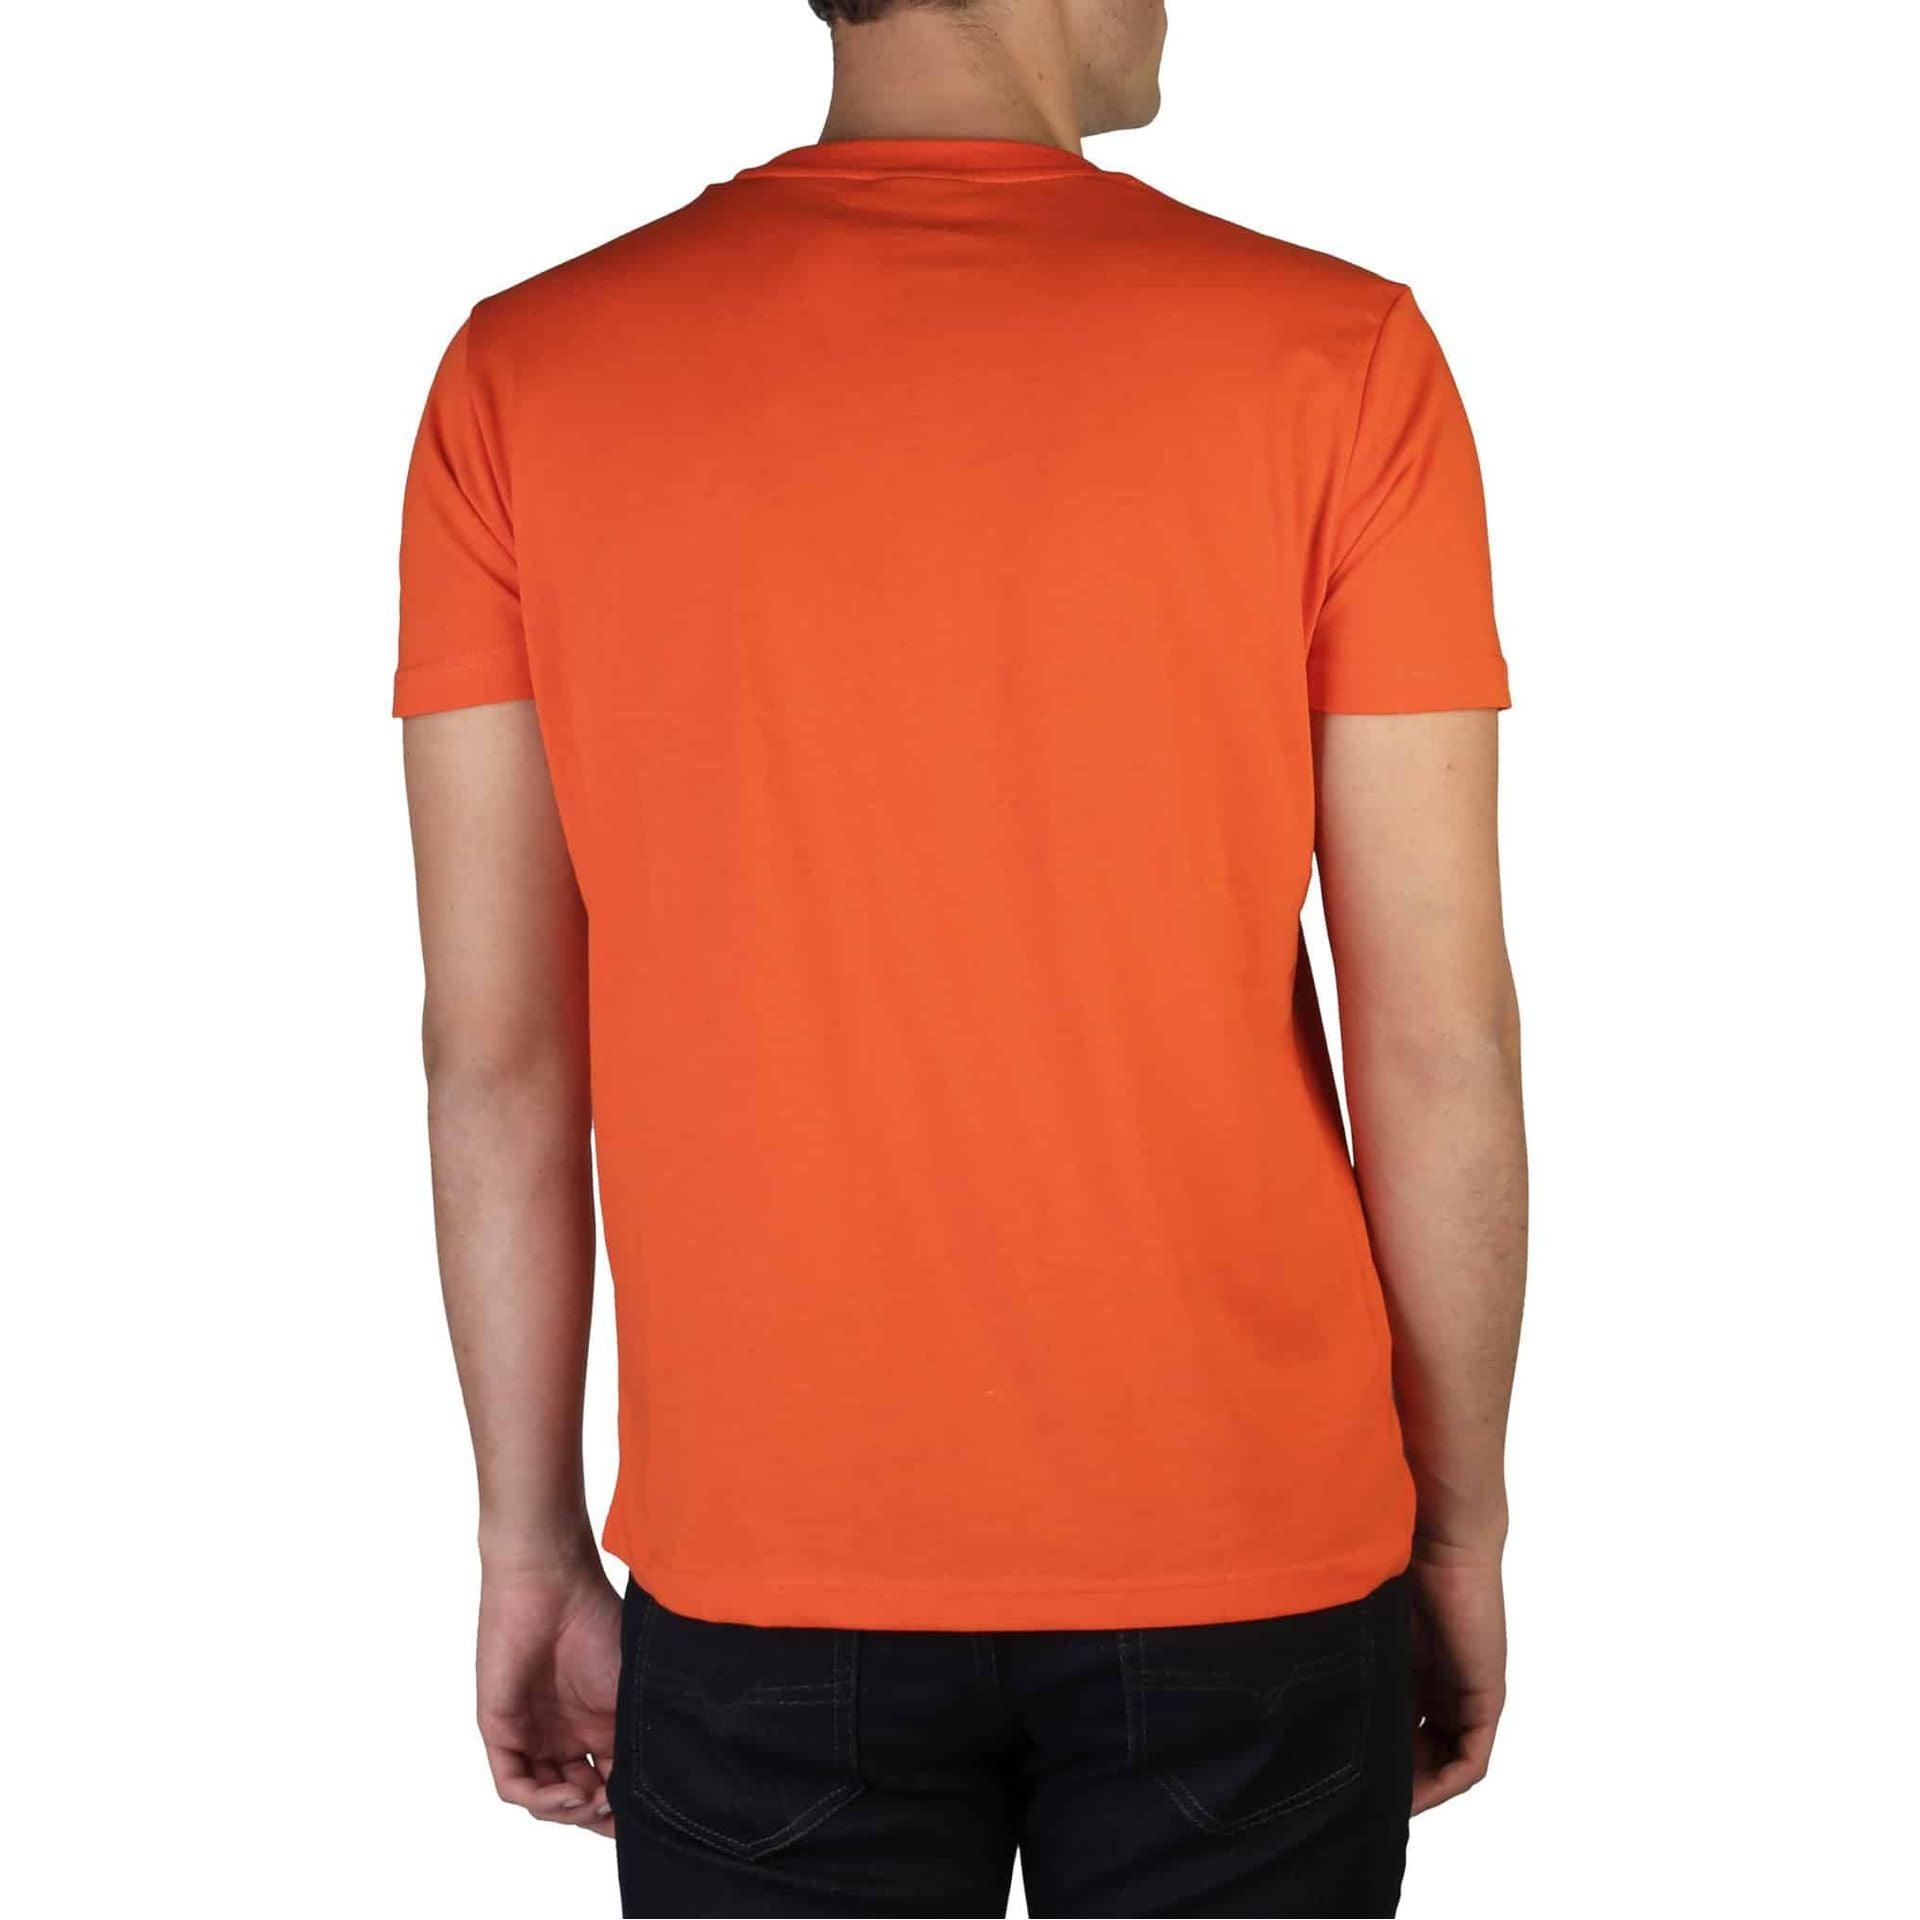 Diesel Men T-shirts - Orange Brand T-shirts - T-Shirt - Guocali